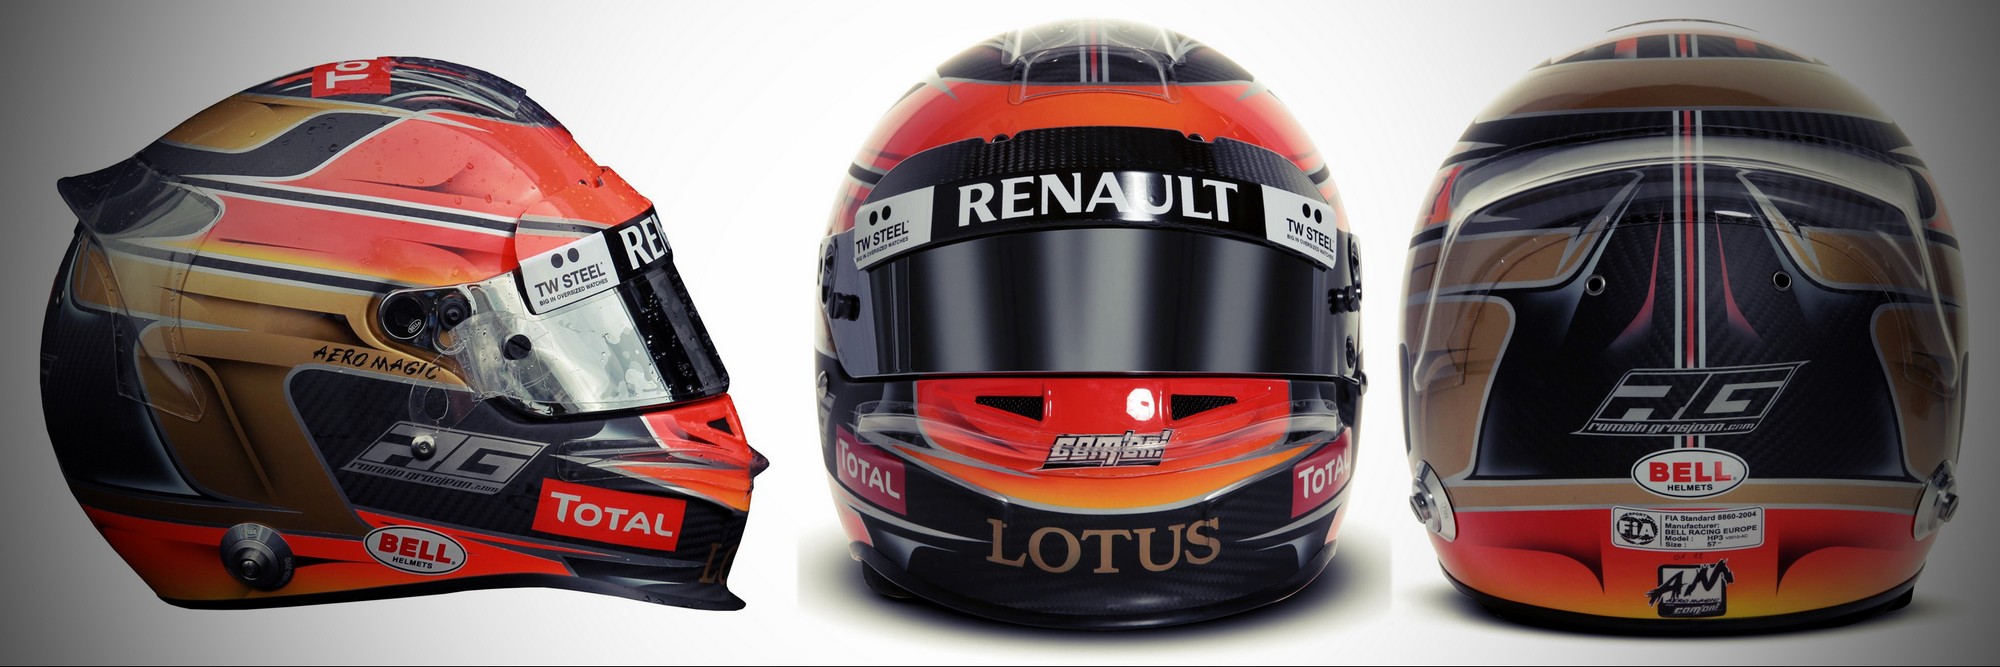 Шлем Романа Грожана на сезон 2012 года | 2012 helmet of Romain Grosjean